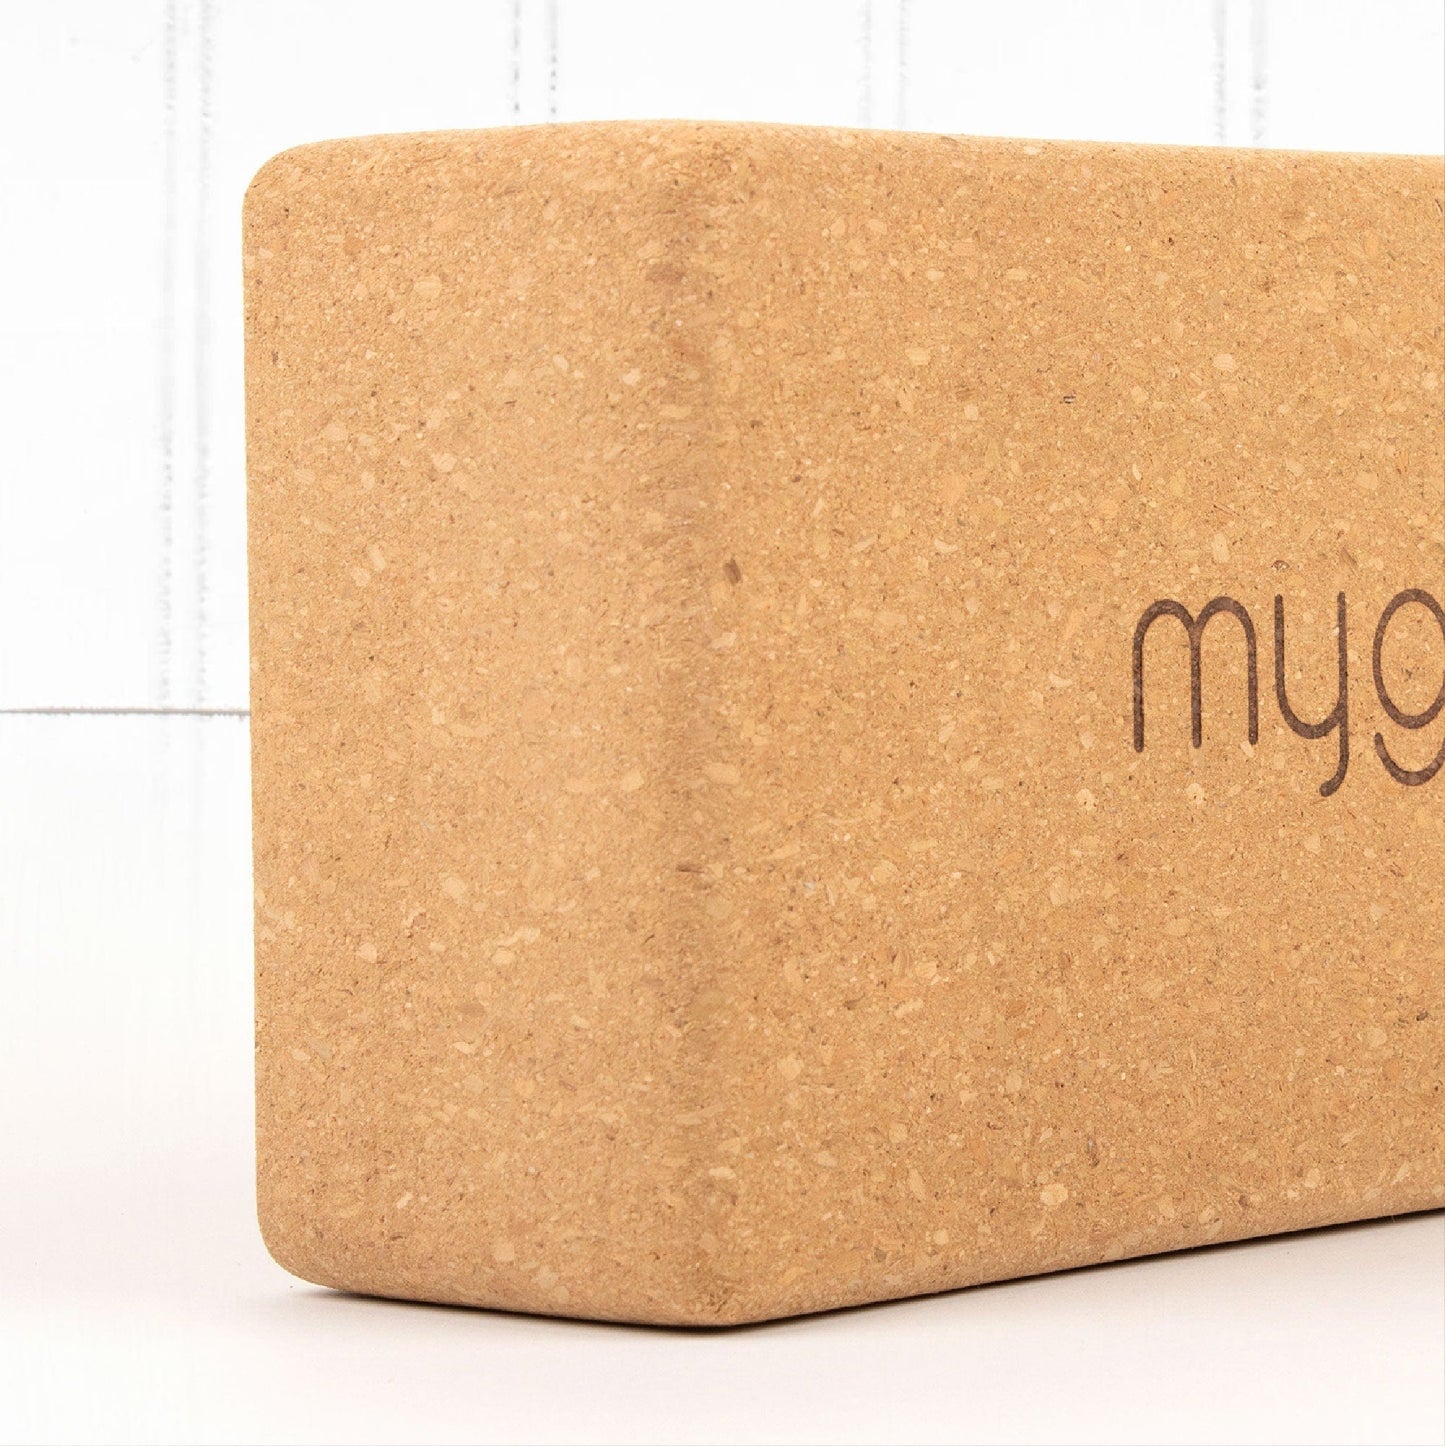 Load image into Gallery viewer, Myga Yoga Cork Yoga Block - Myga
